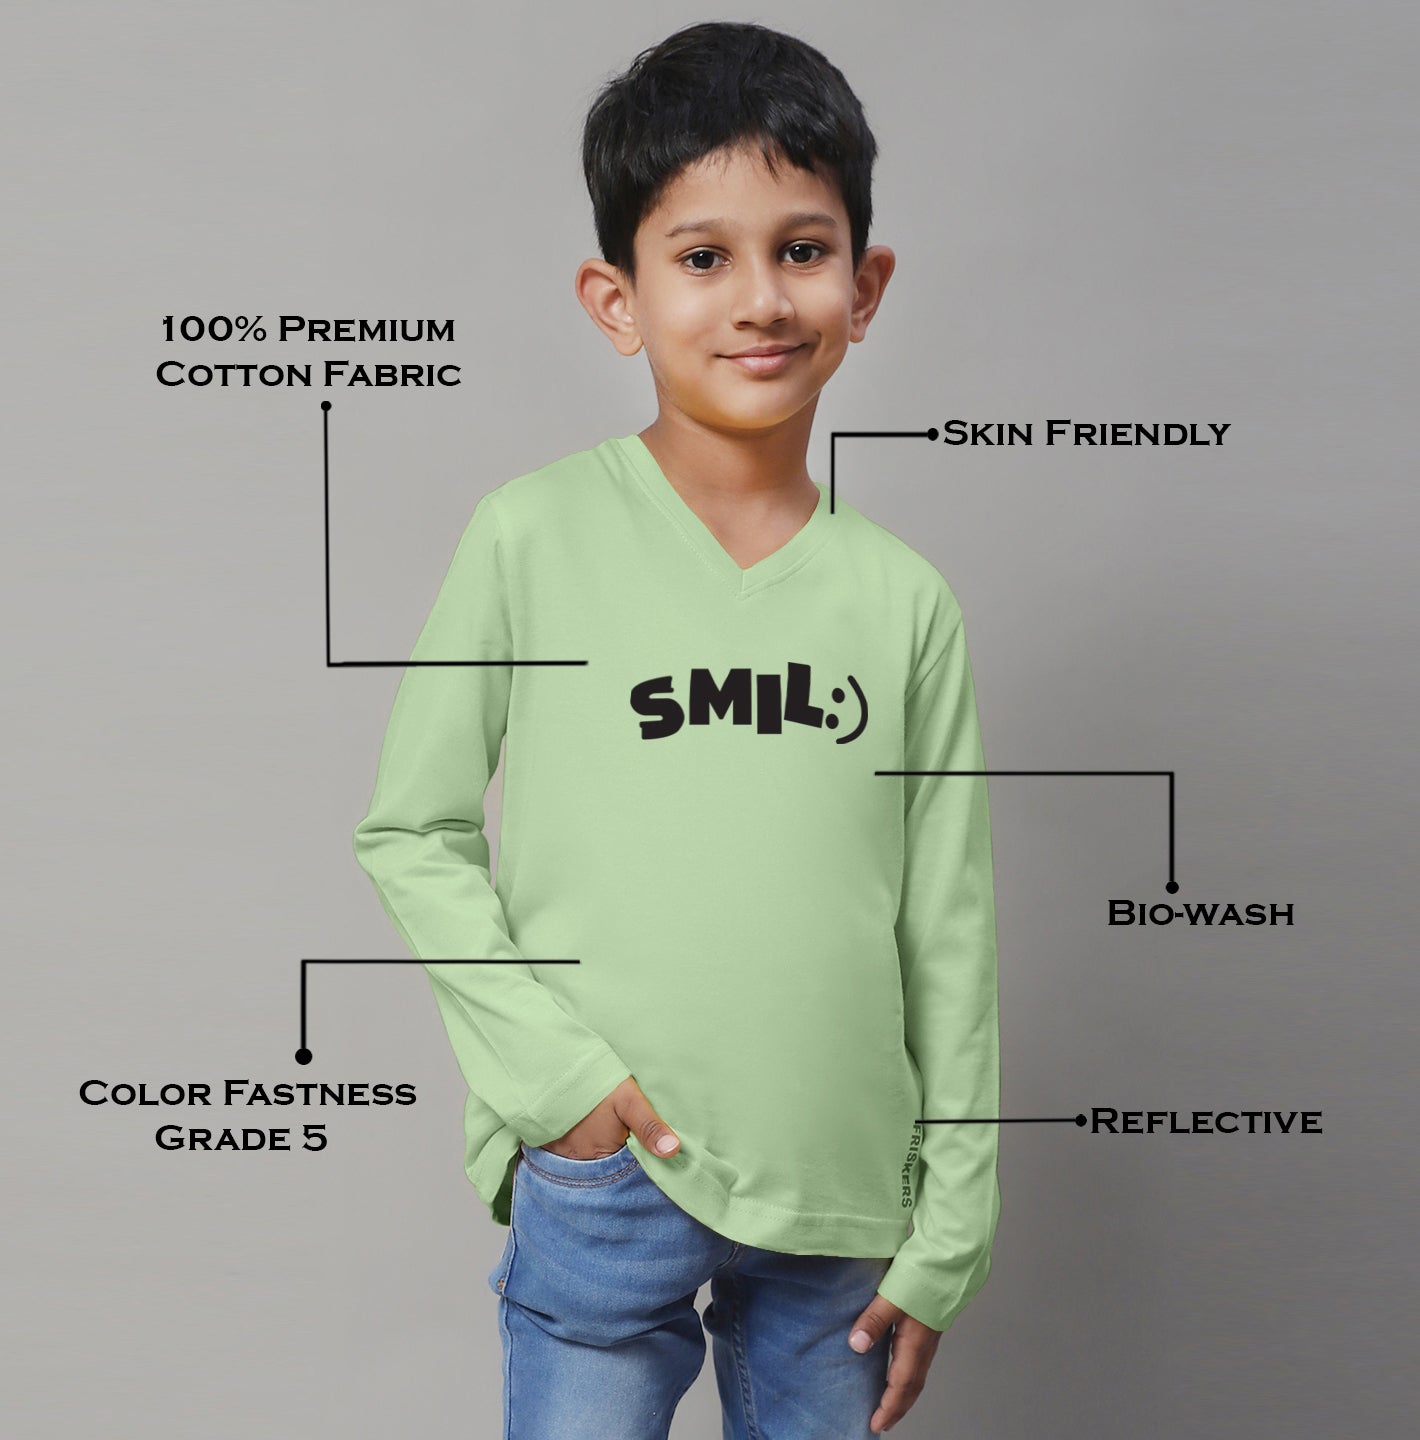 Boys Smile Full Sleeves Printed T-Shirt - Friskers